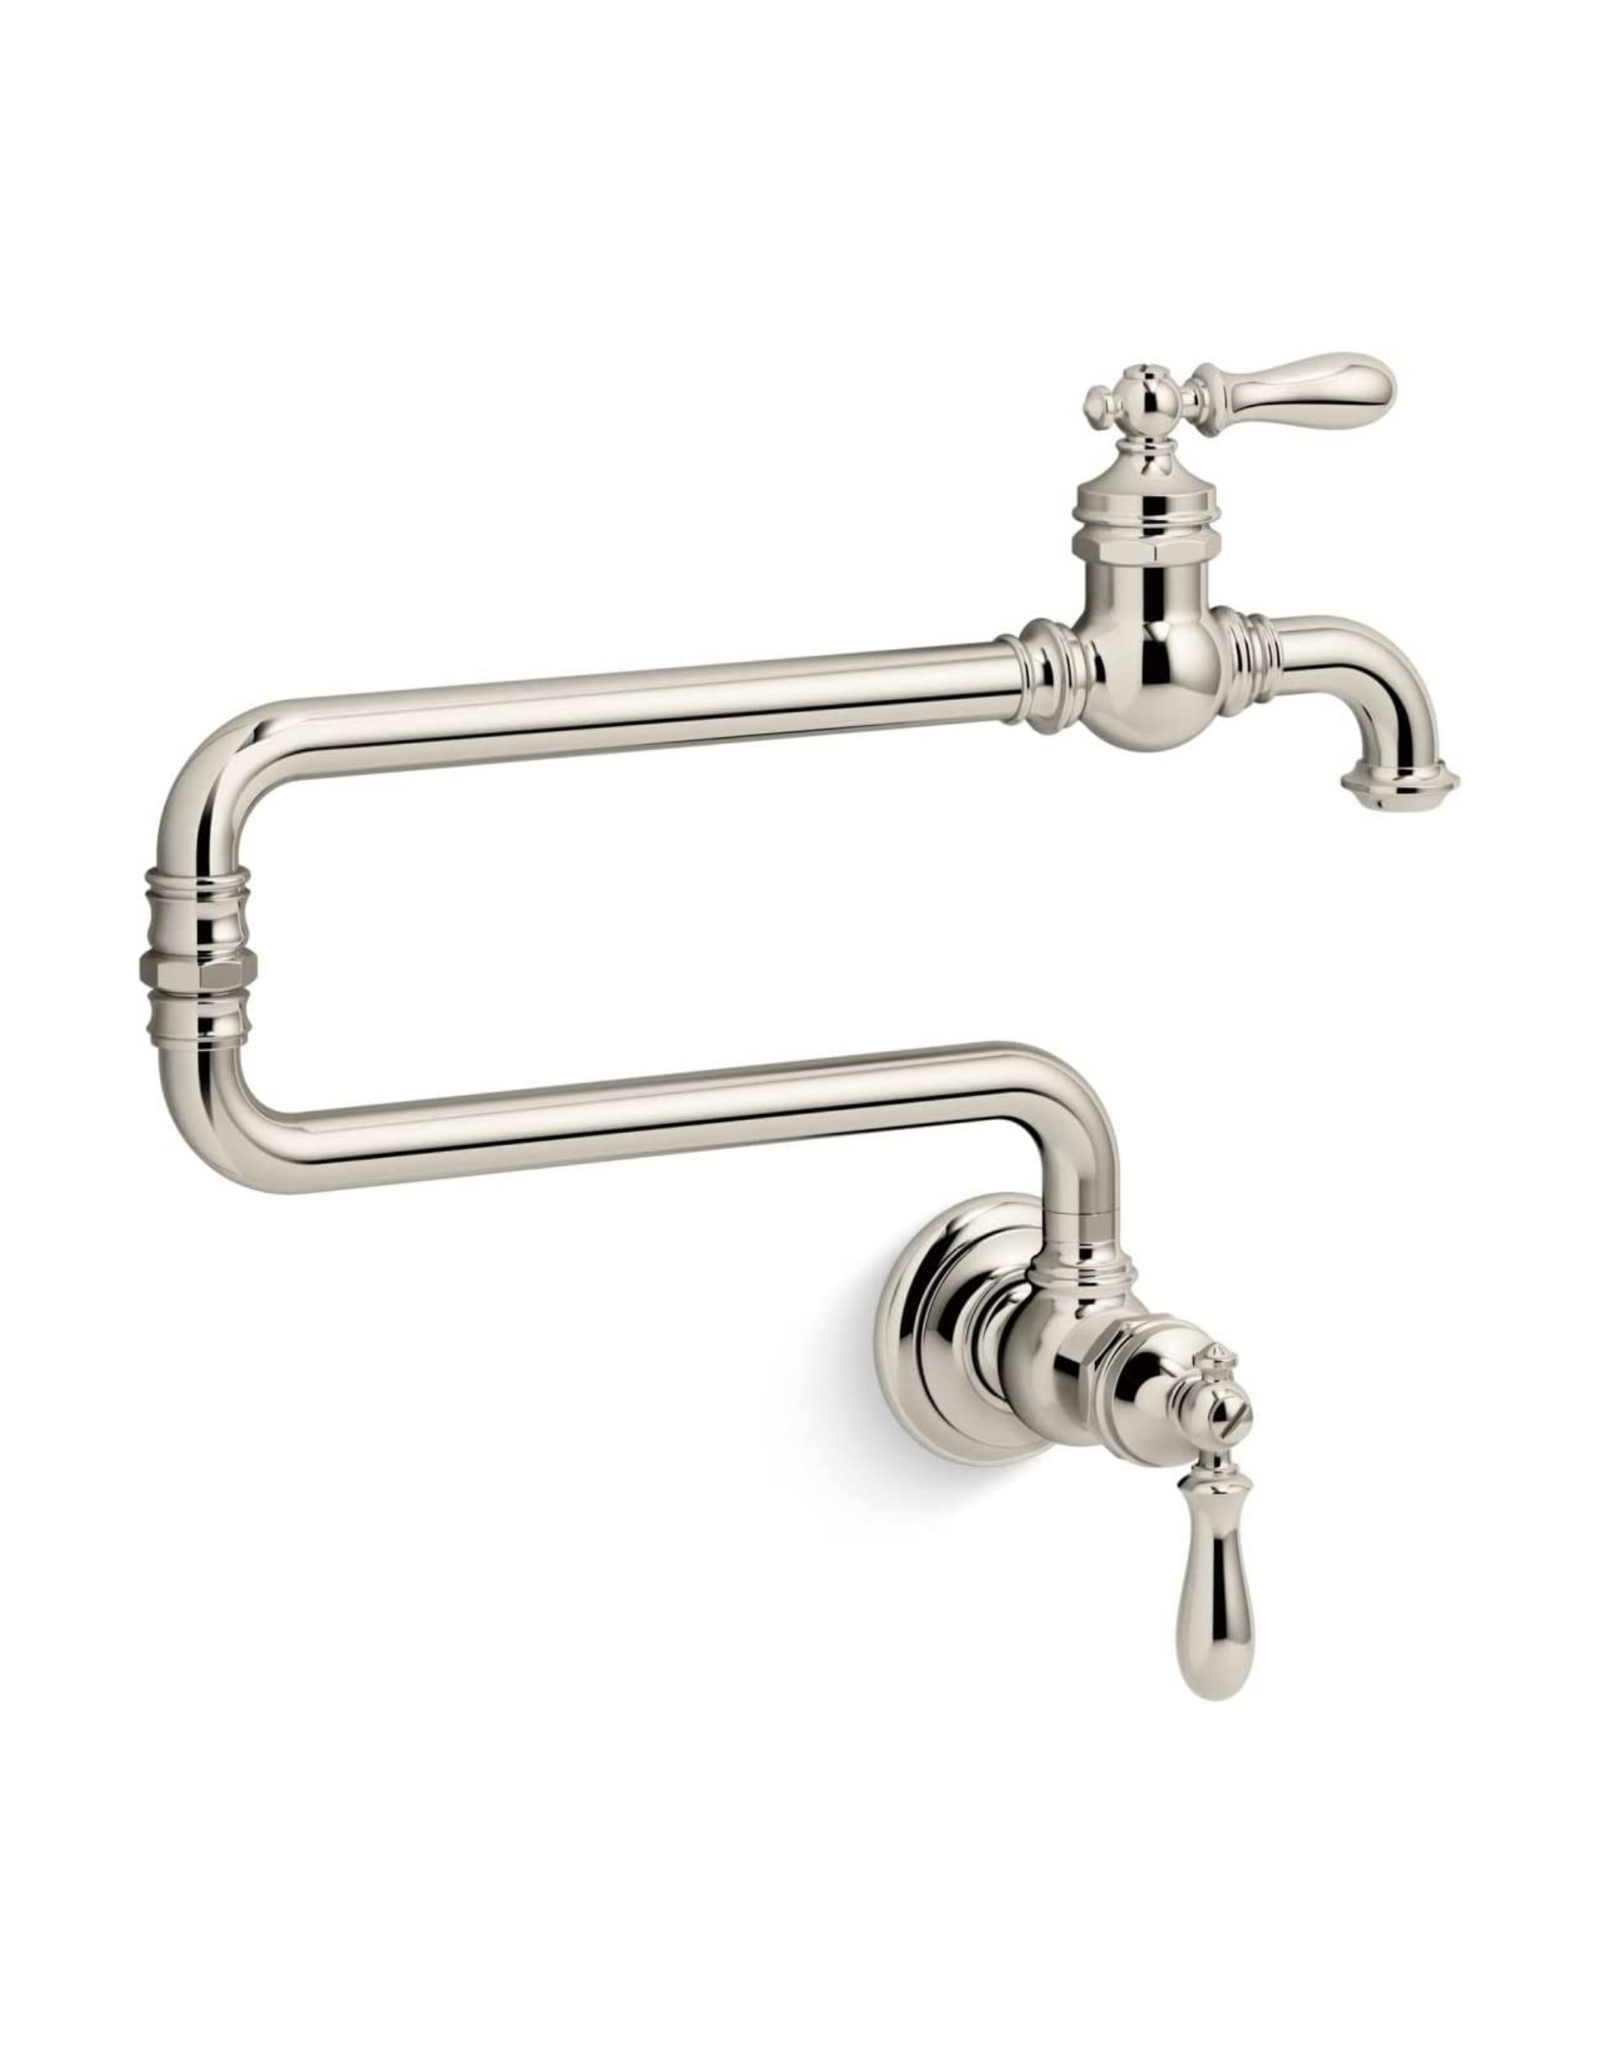 KOHLER 99270-SN Artifacts Kitchen Sink Faucet, Vibrant Polished Nickel